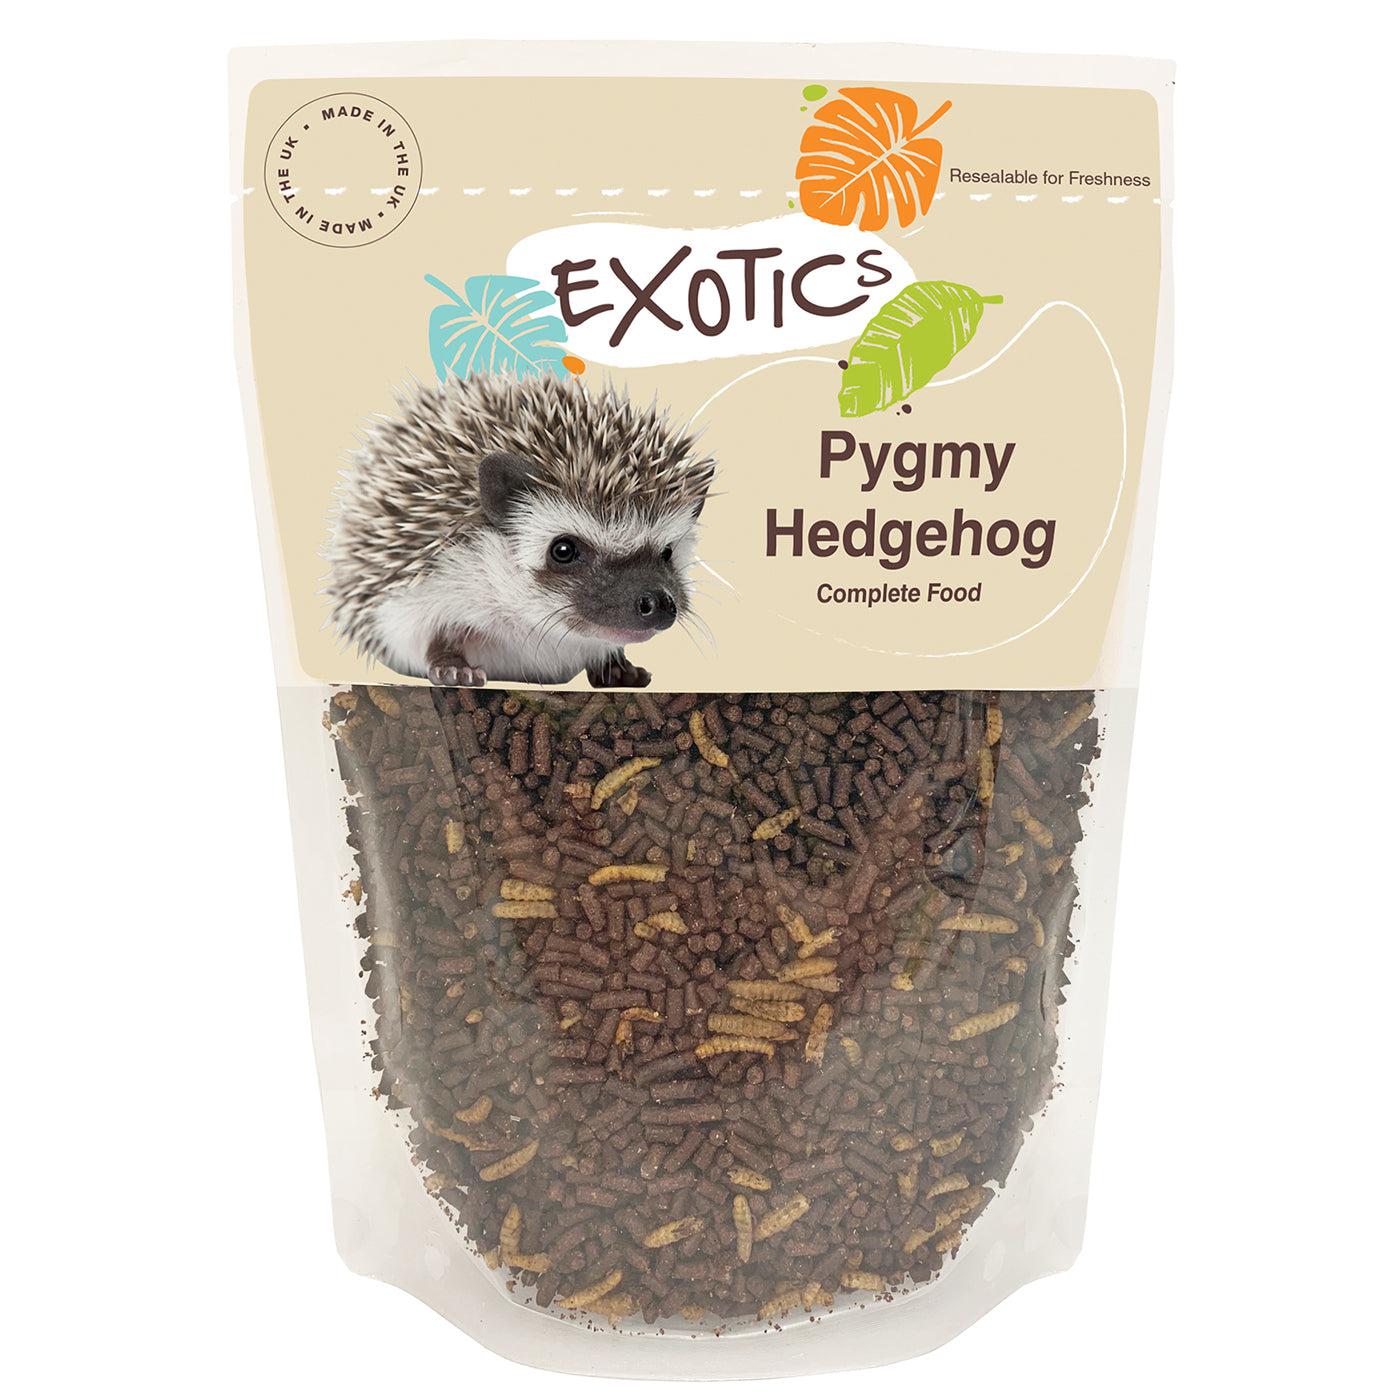 Natures Grub Pygmy Hedgehog Complete